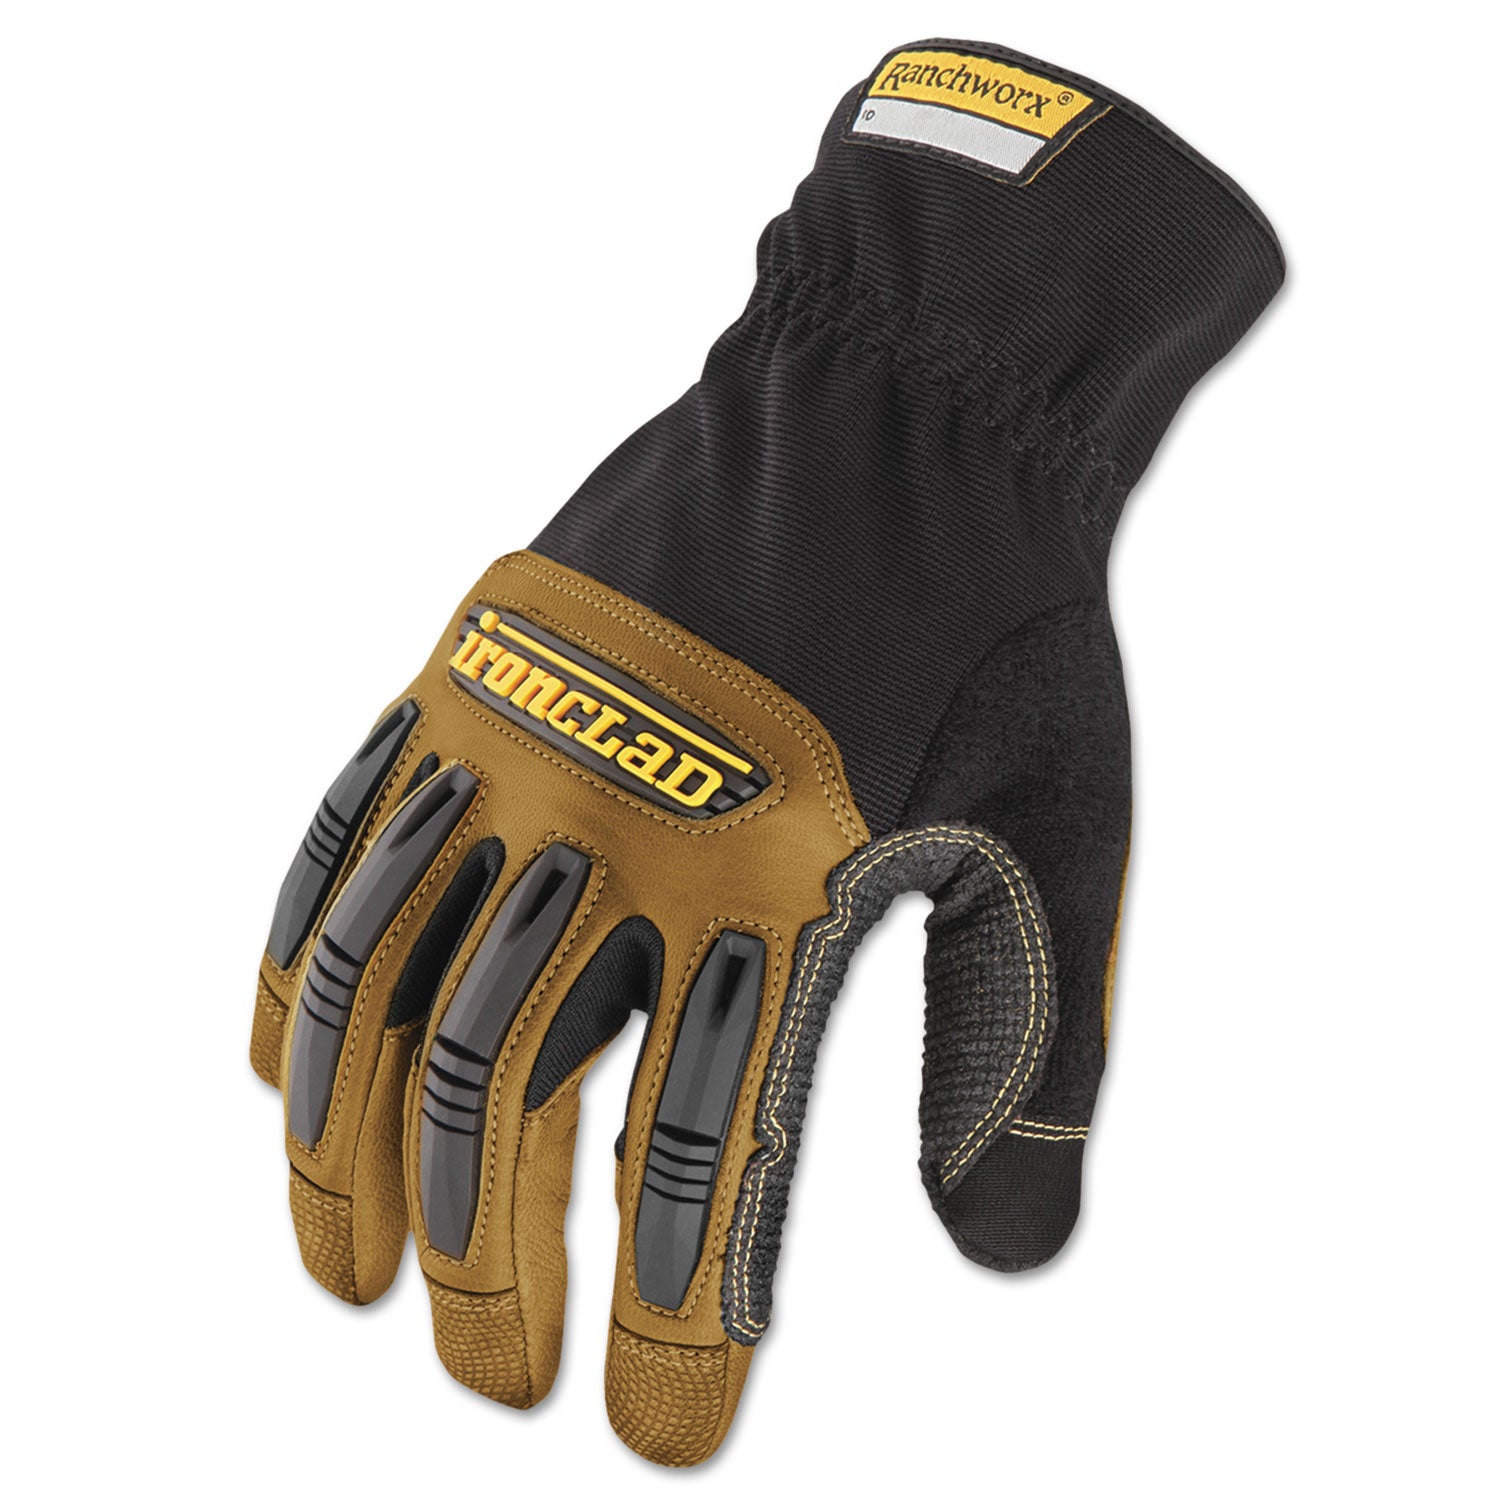 Ranchworx Leather Gloves, Black/Tan, Large - 